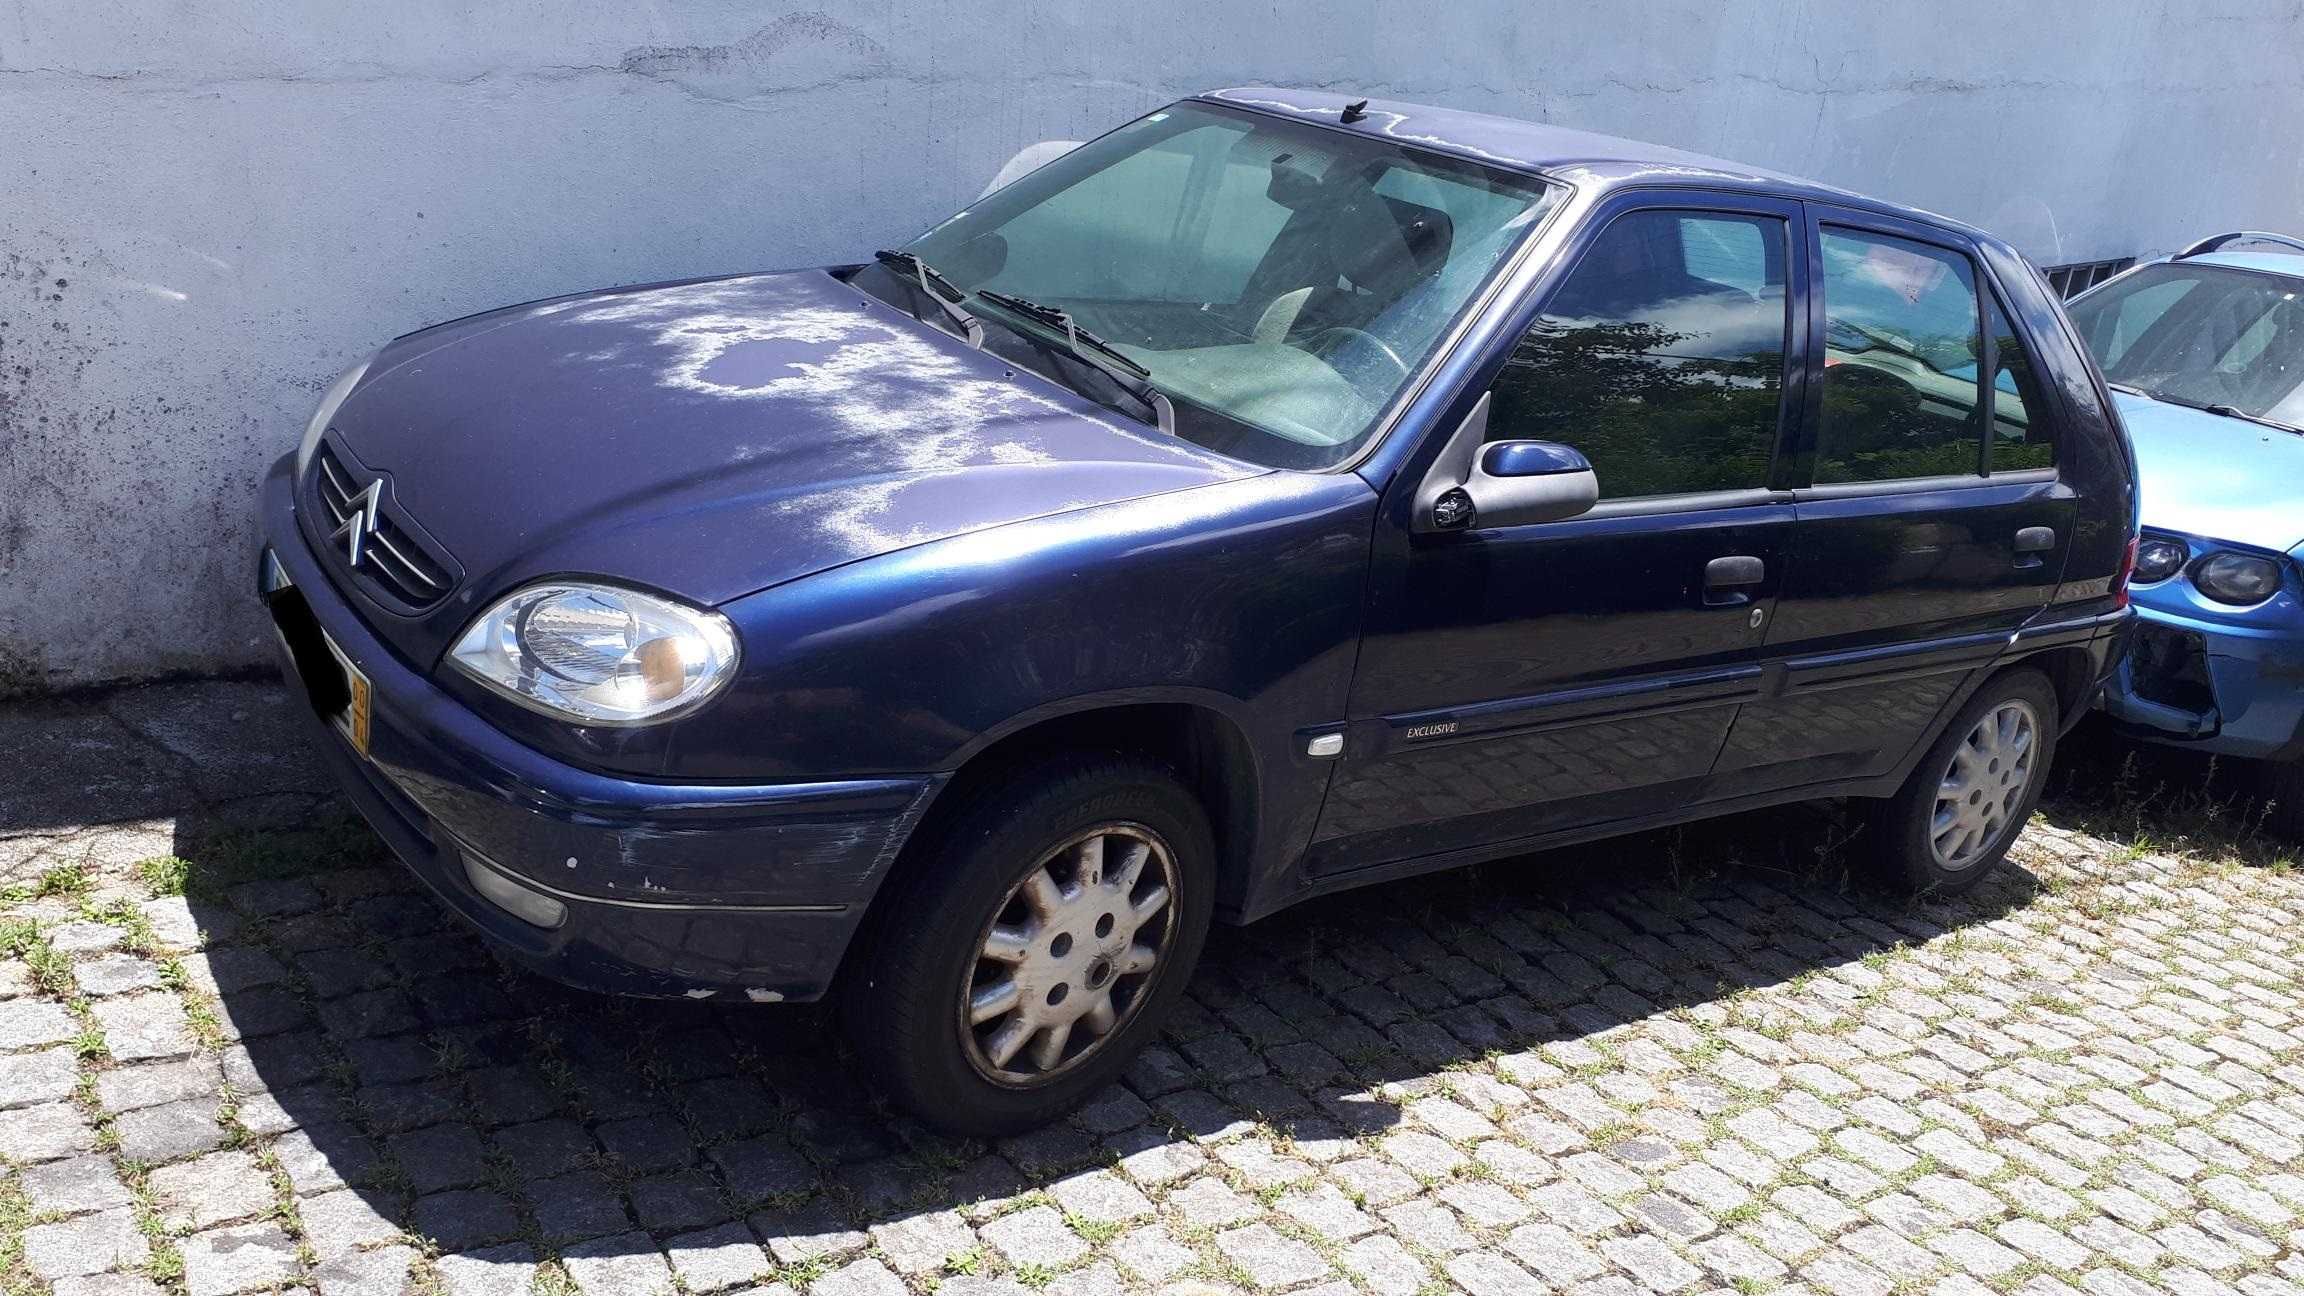 CITROЁN Saxo Hatchback 1.1 X,SX Gasolina (60 cv do ano 2000